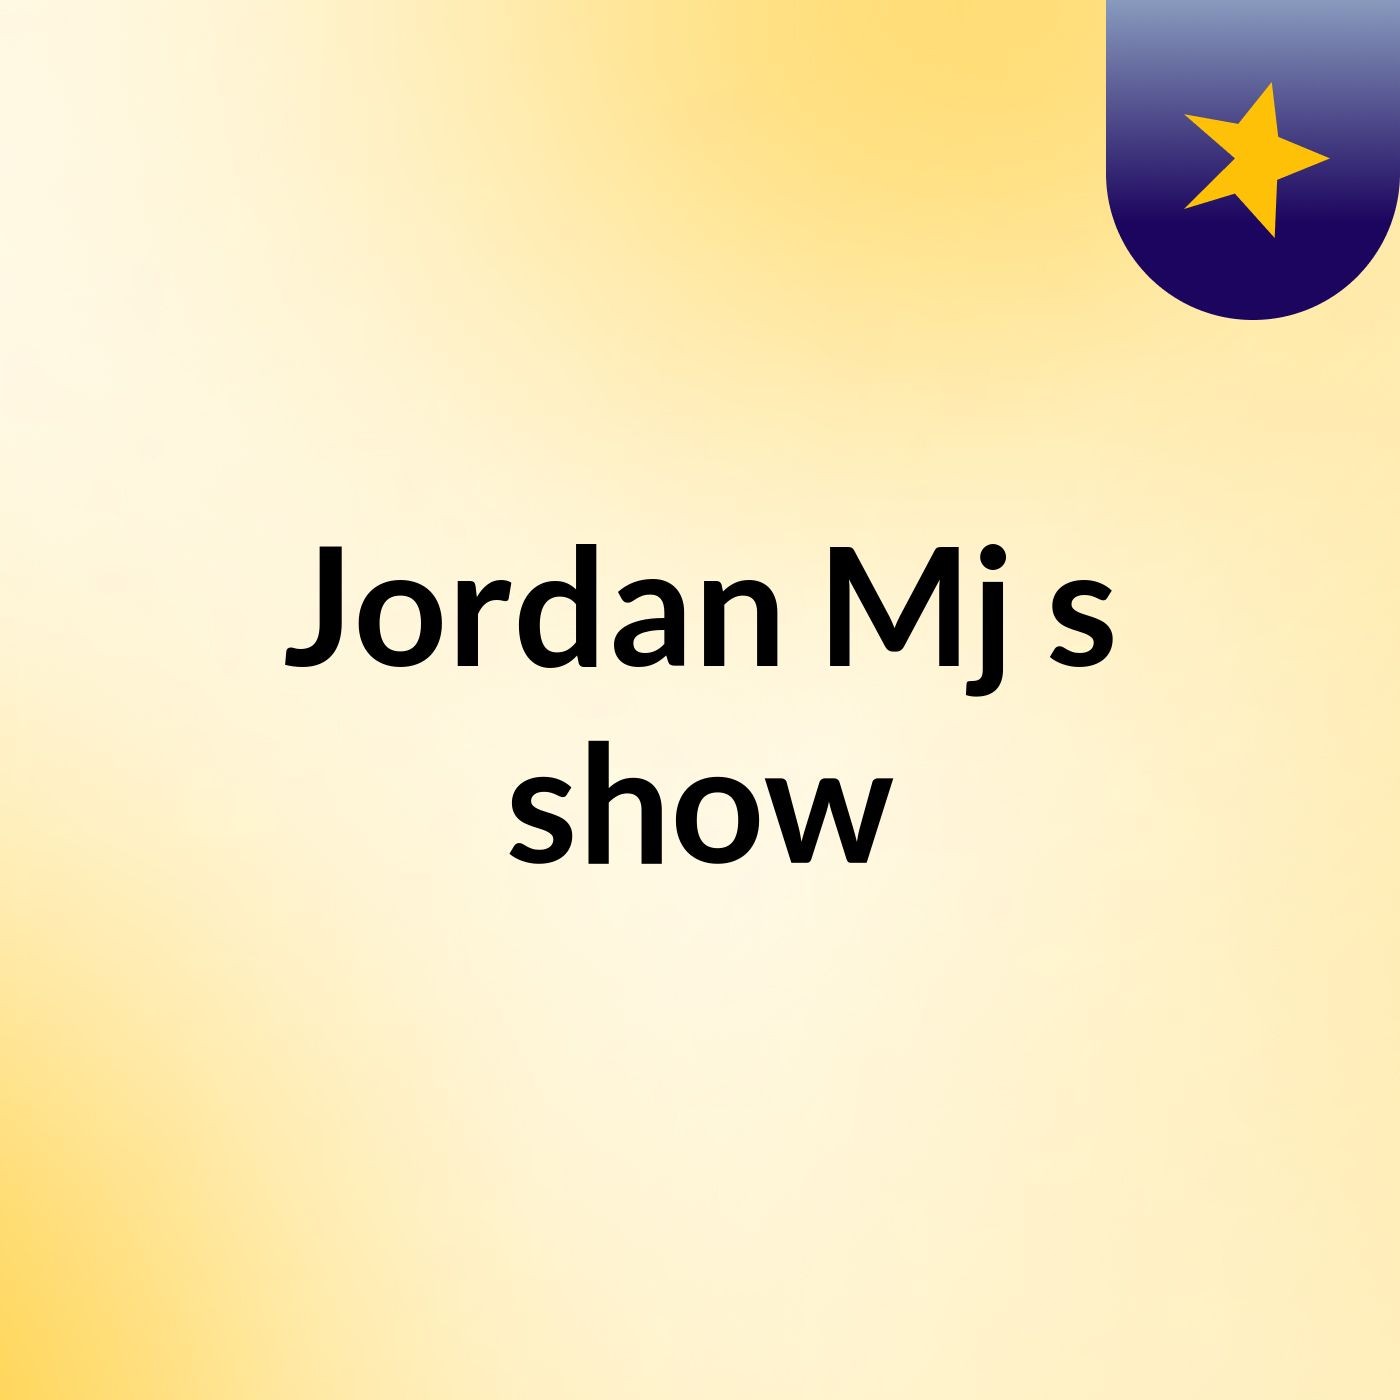 Jordan Mj's show